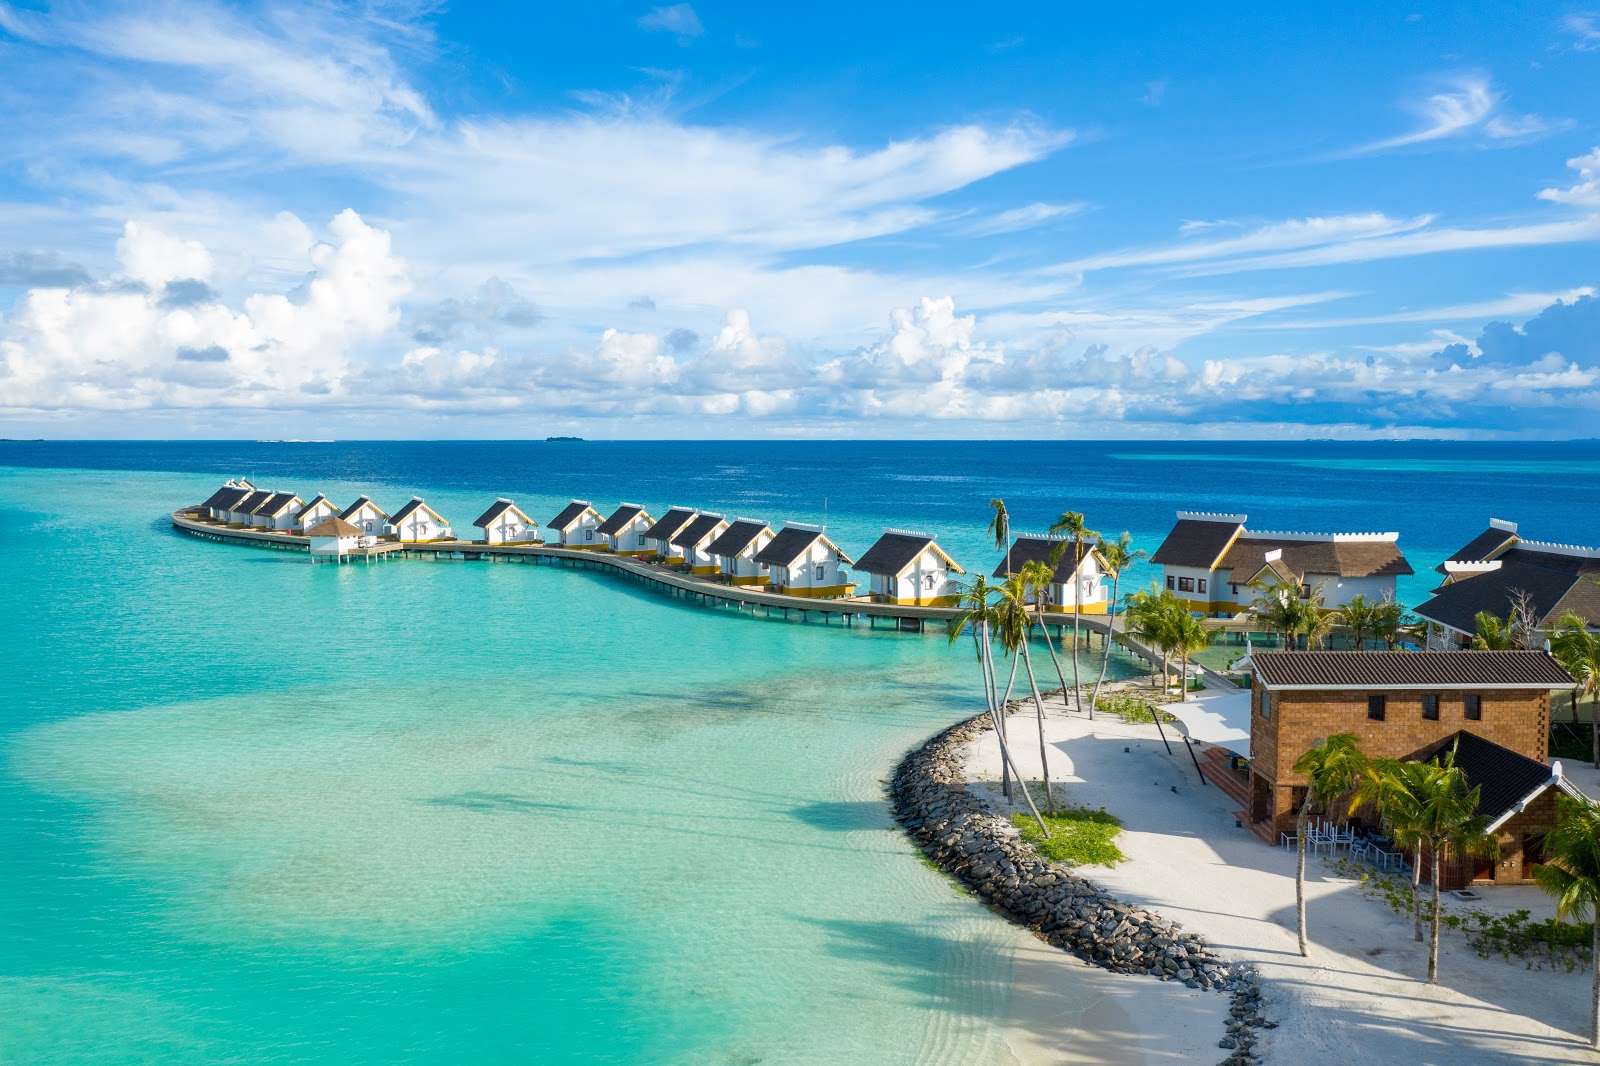 Foto av SAii Lagoon Maldives hotellområde